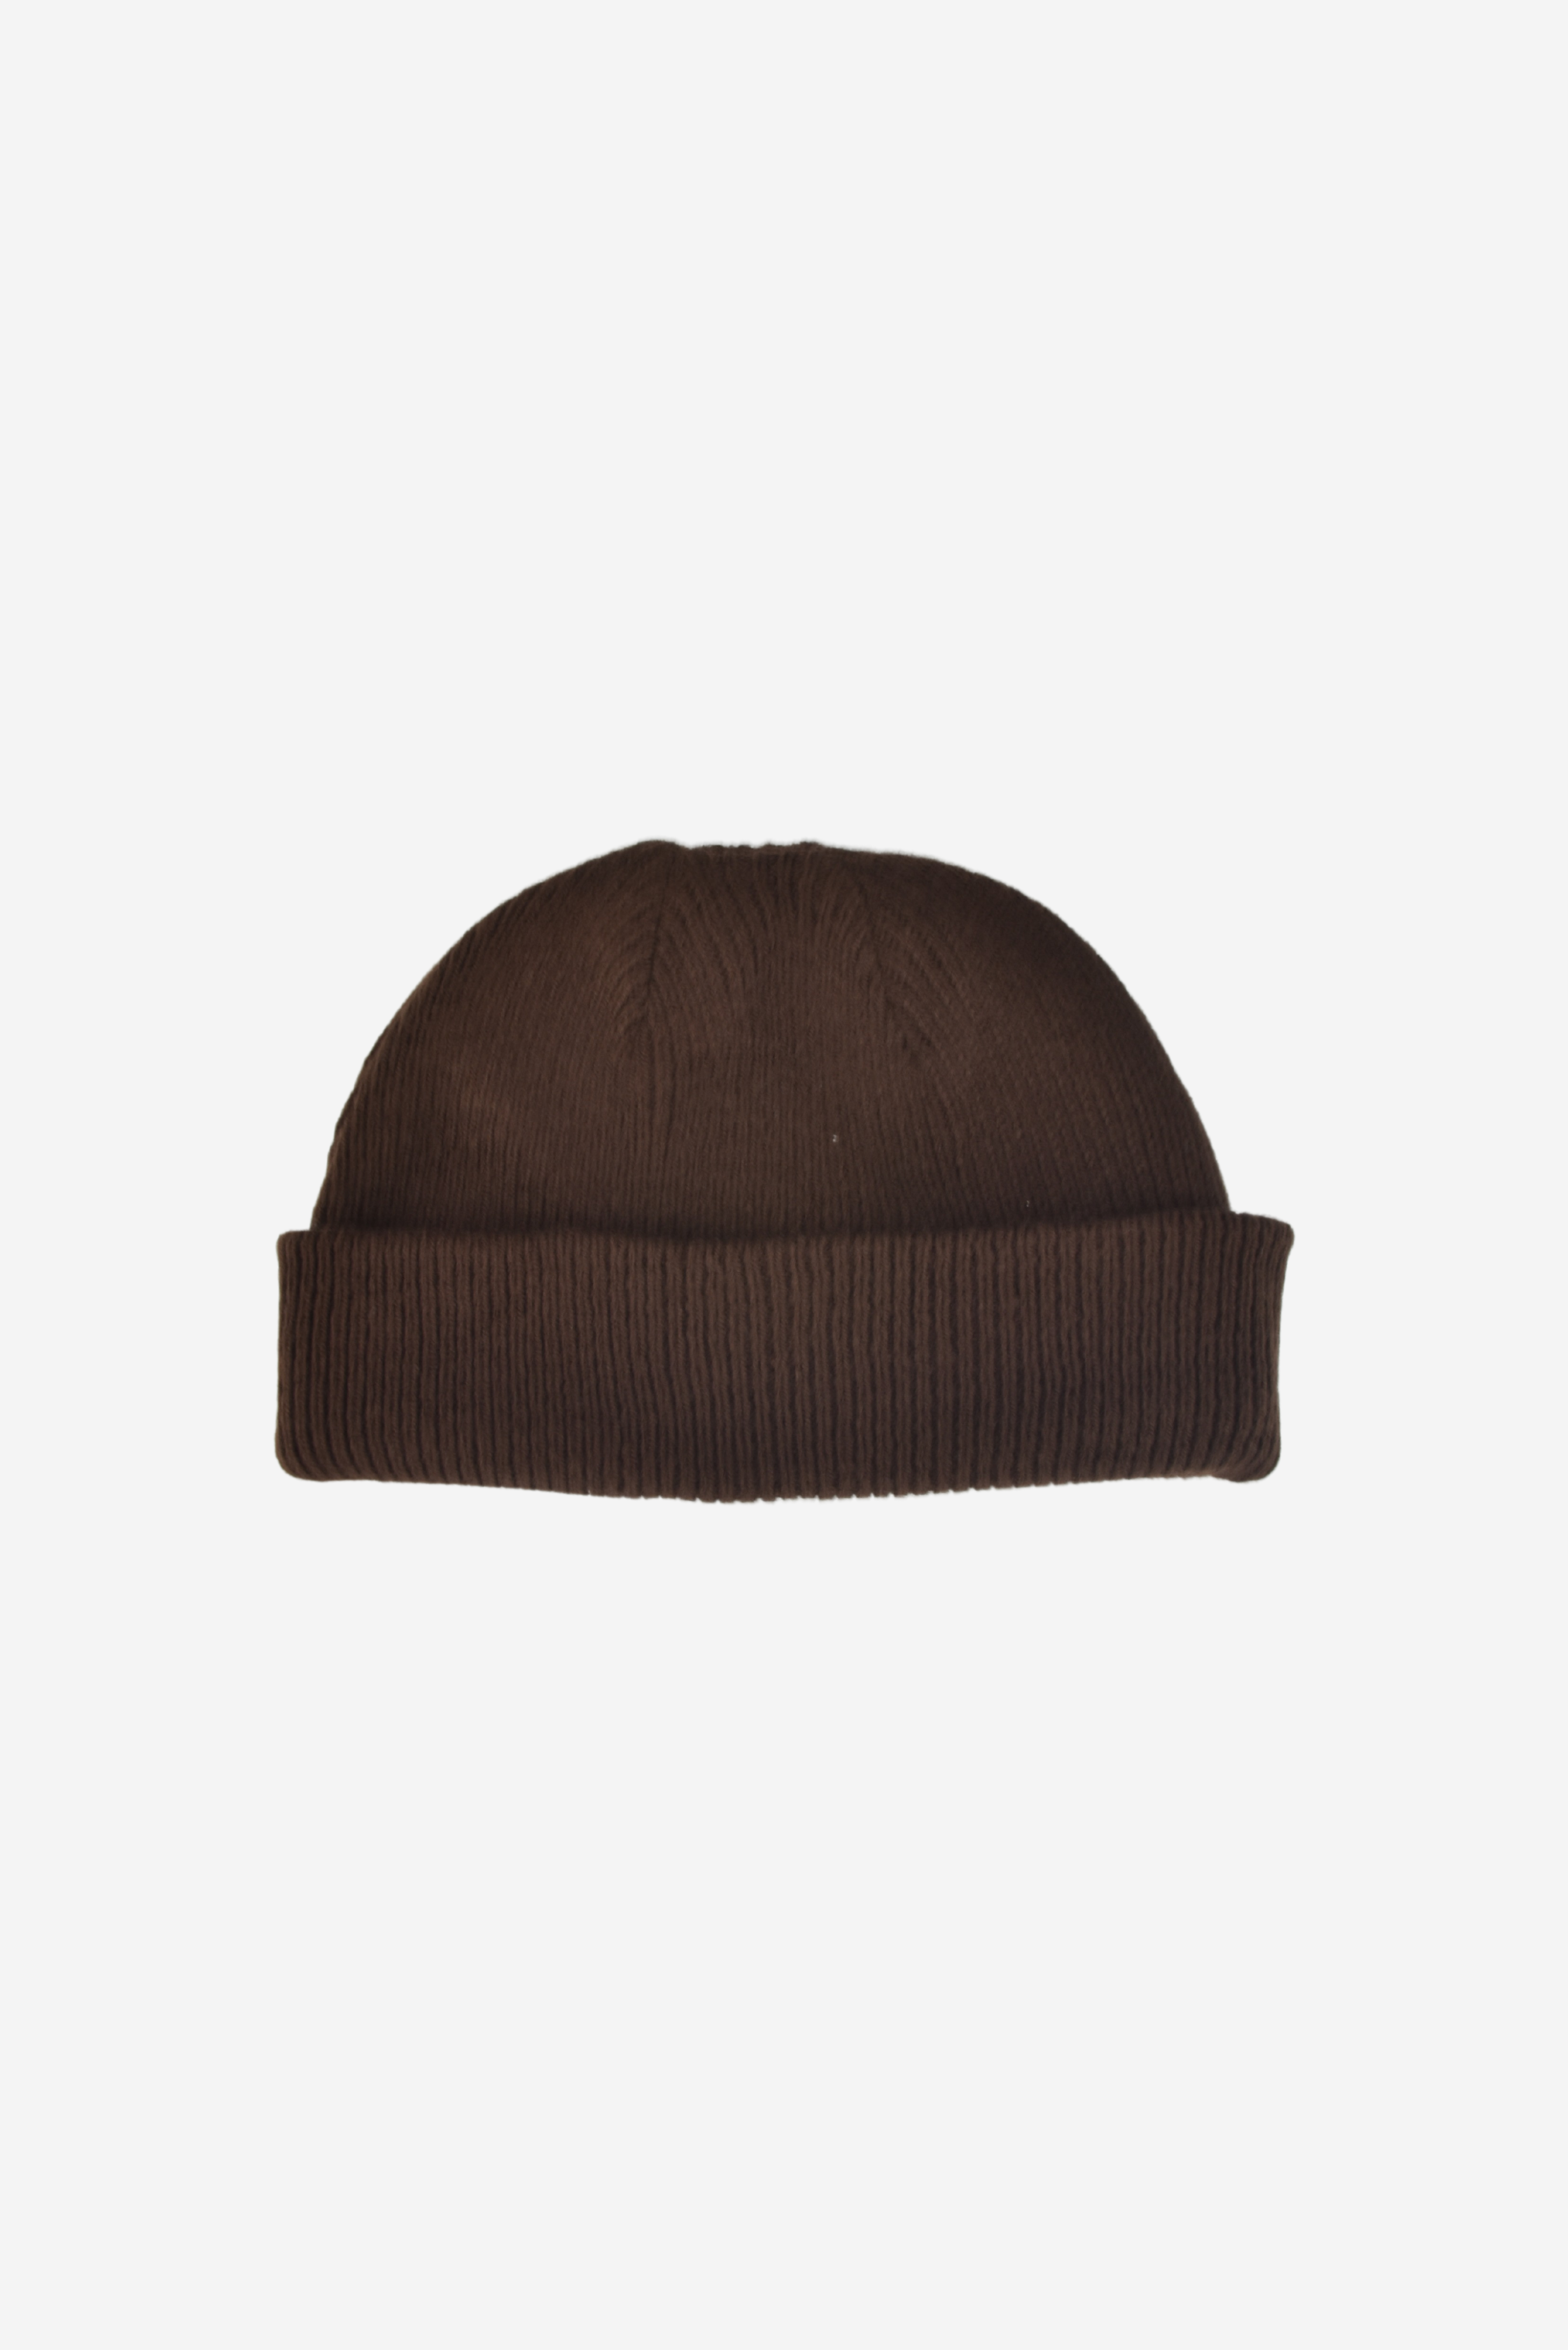 Humble Pioneer - Dark Brown Fisherman Hat